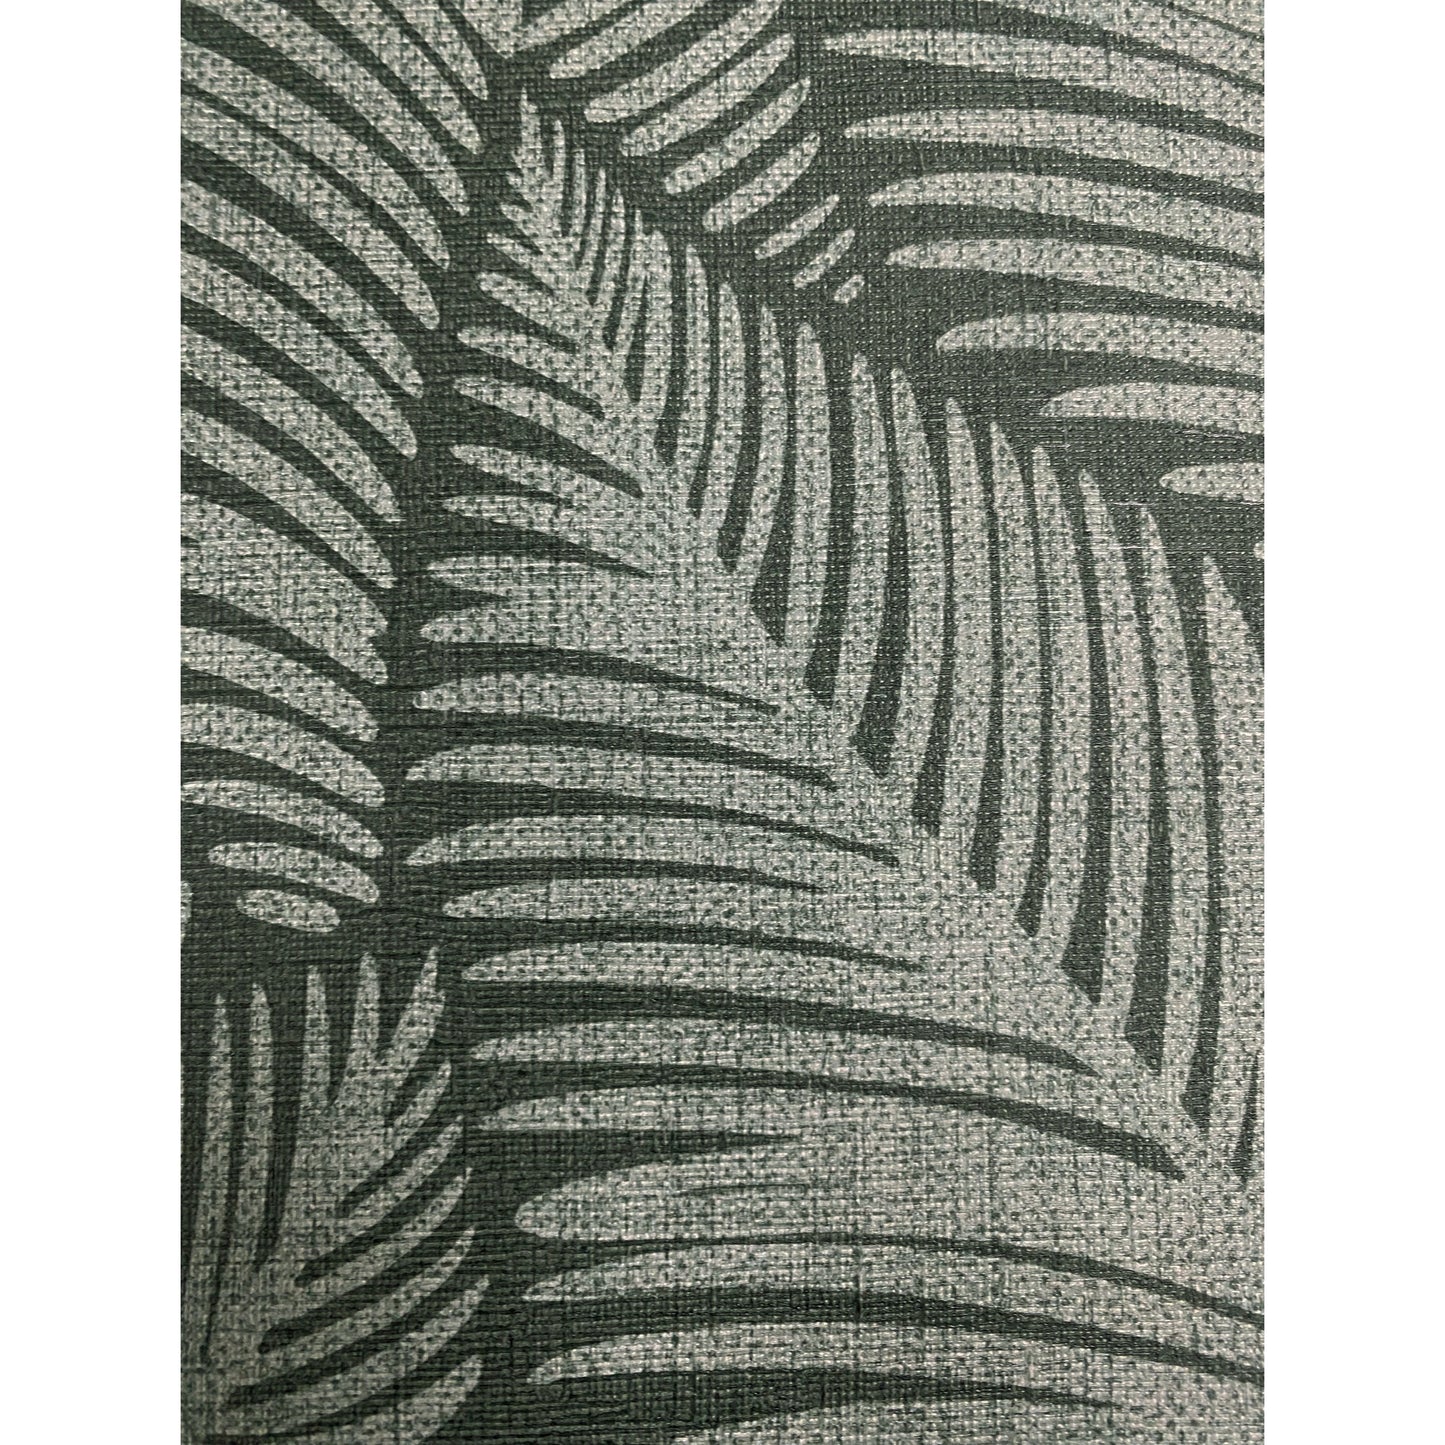 Muriva Denver Leaf Green Wallpaper (196313)